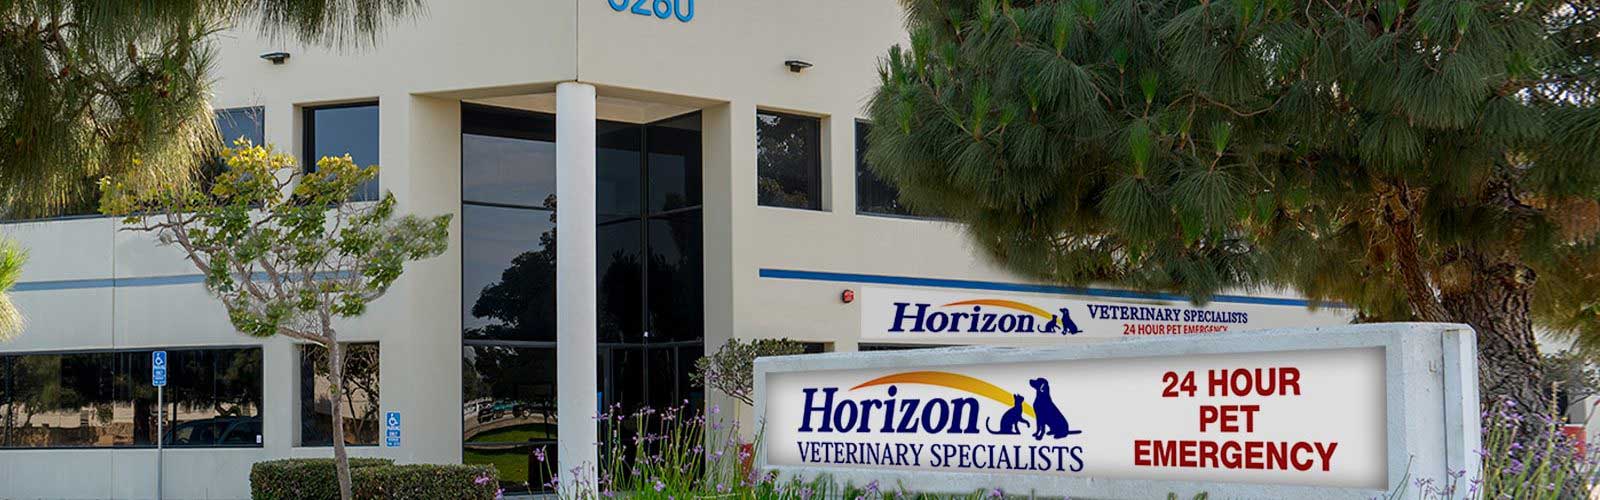 Home - Horizon Veterinary Services